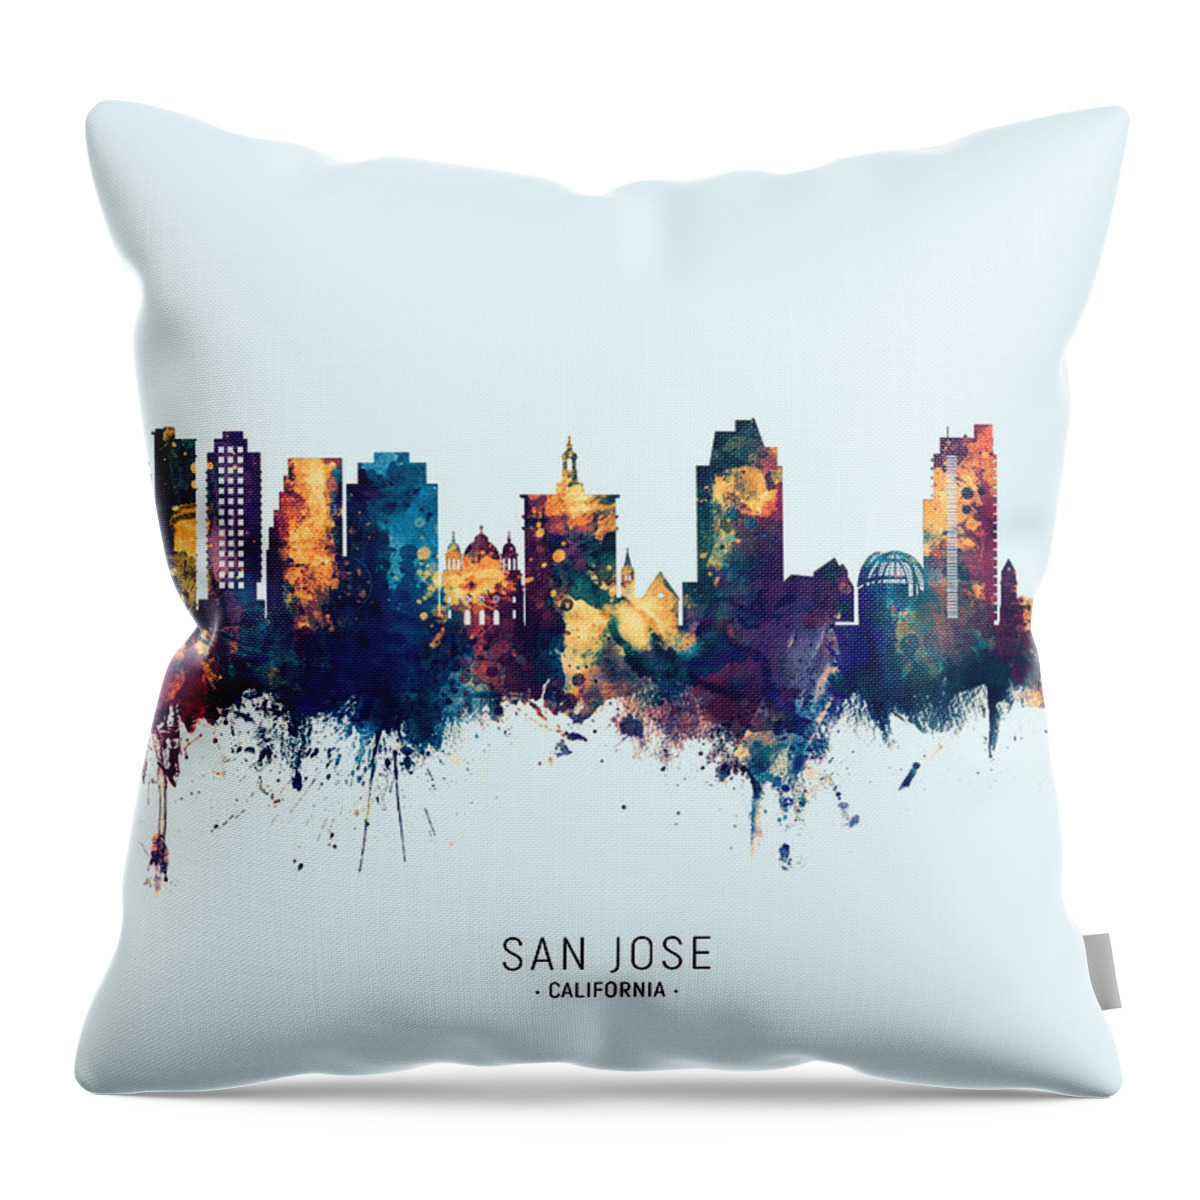 San Jose Throw Pillow featuring the digital art San Jose California Skyline #3 by Michael Tompsett